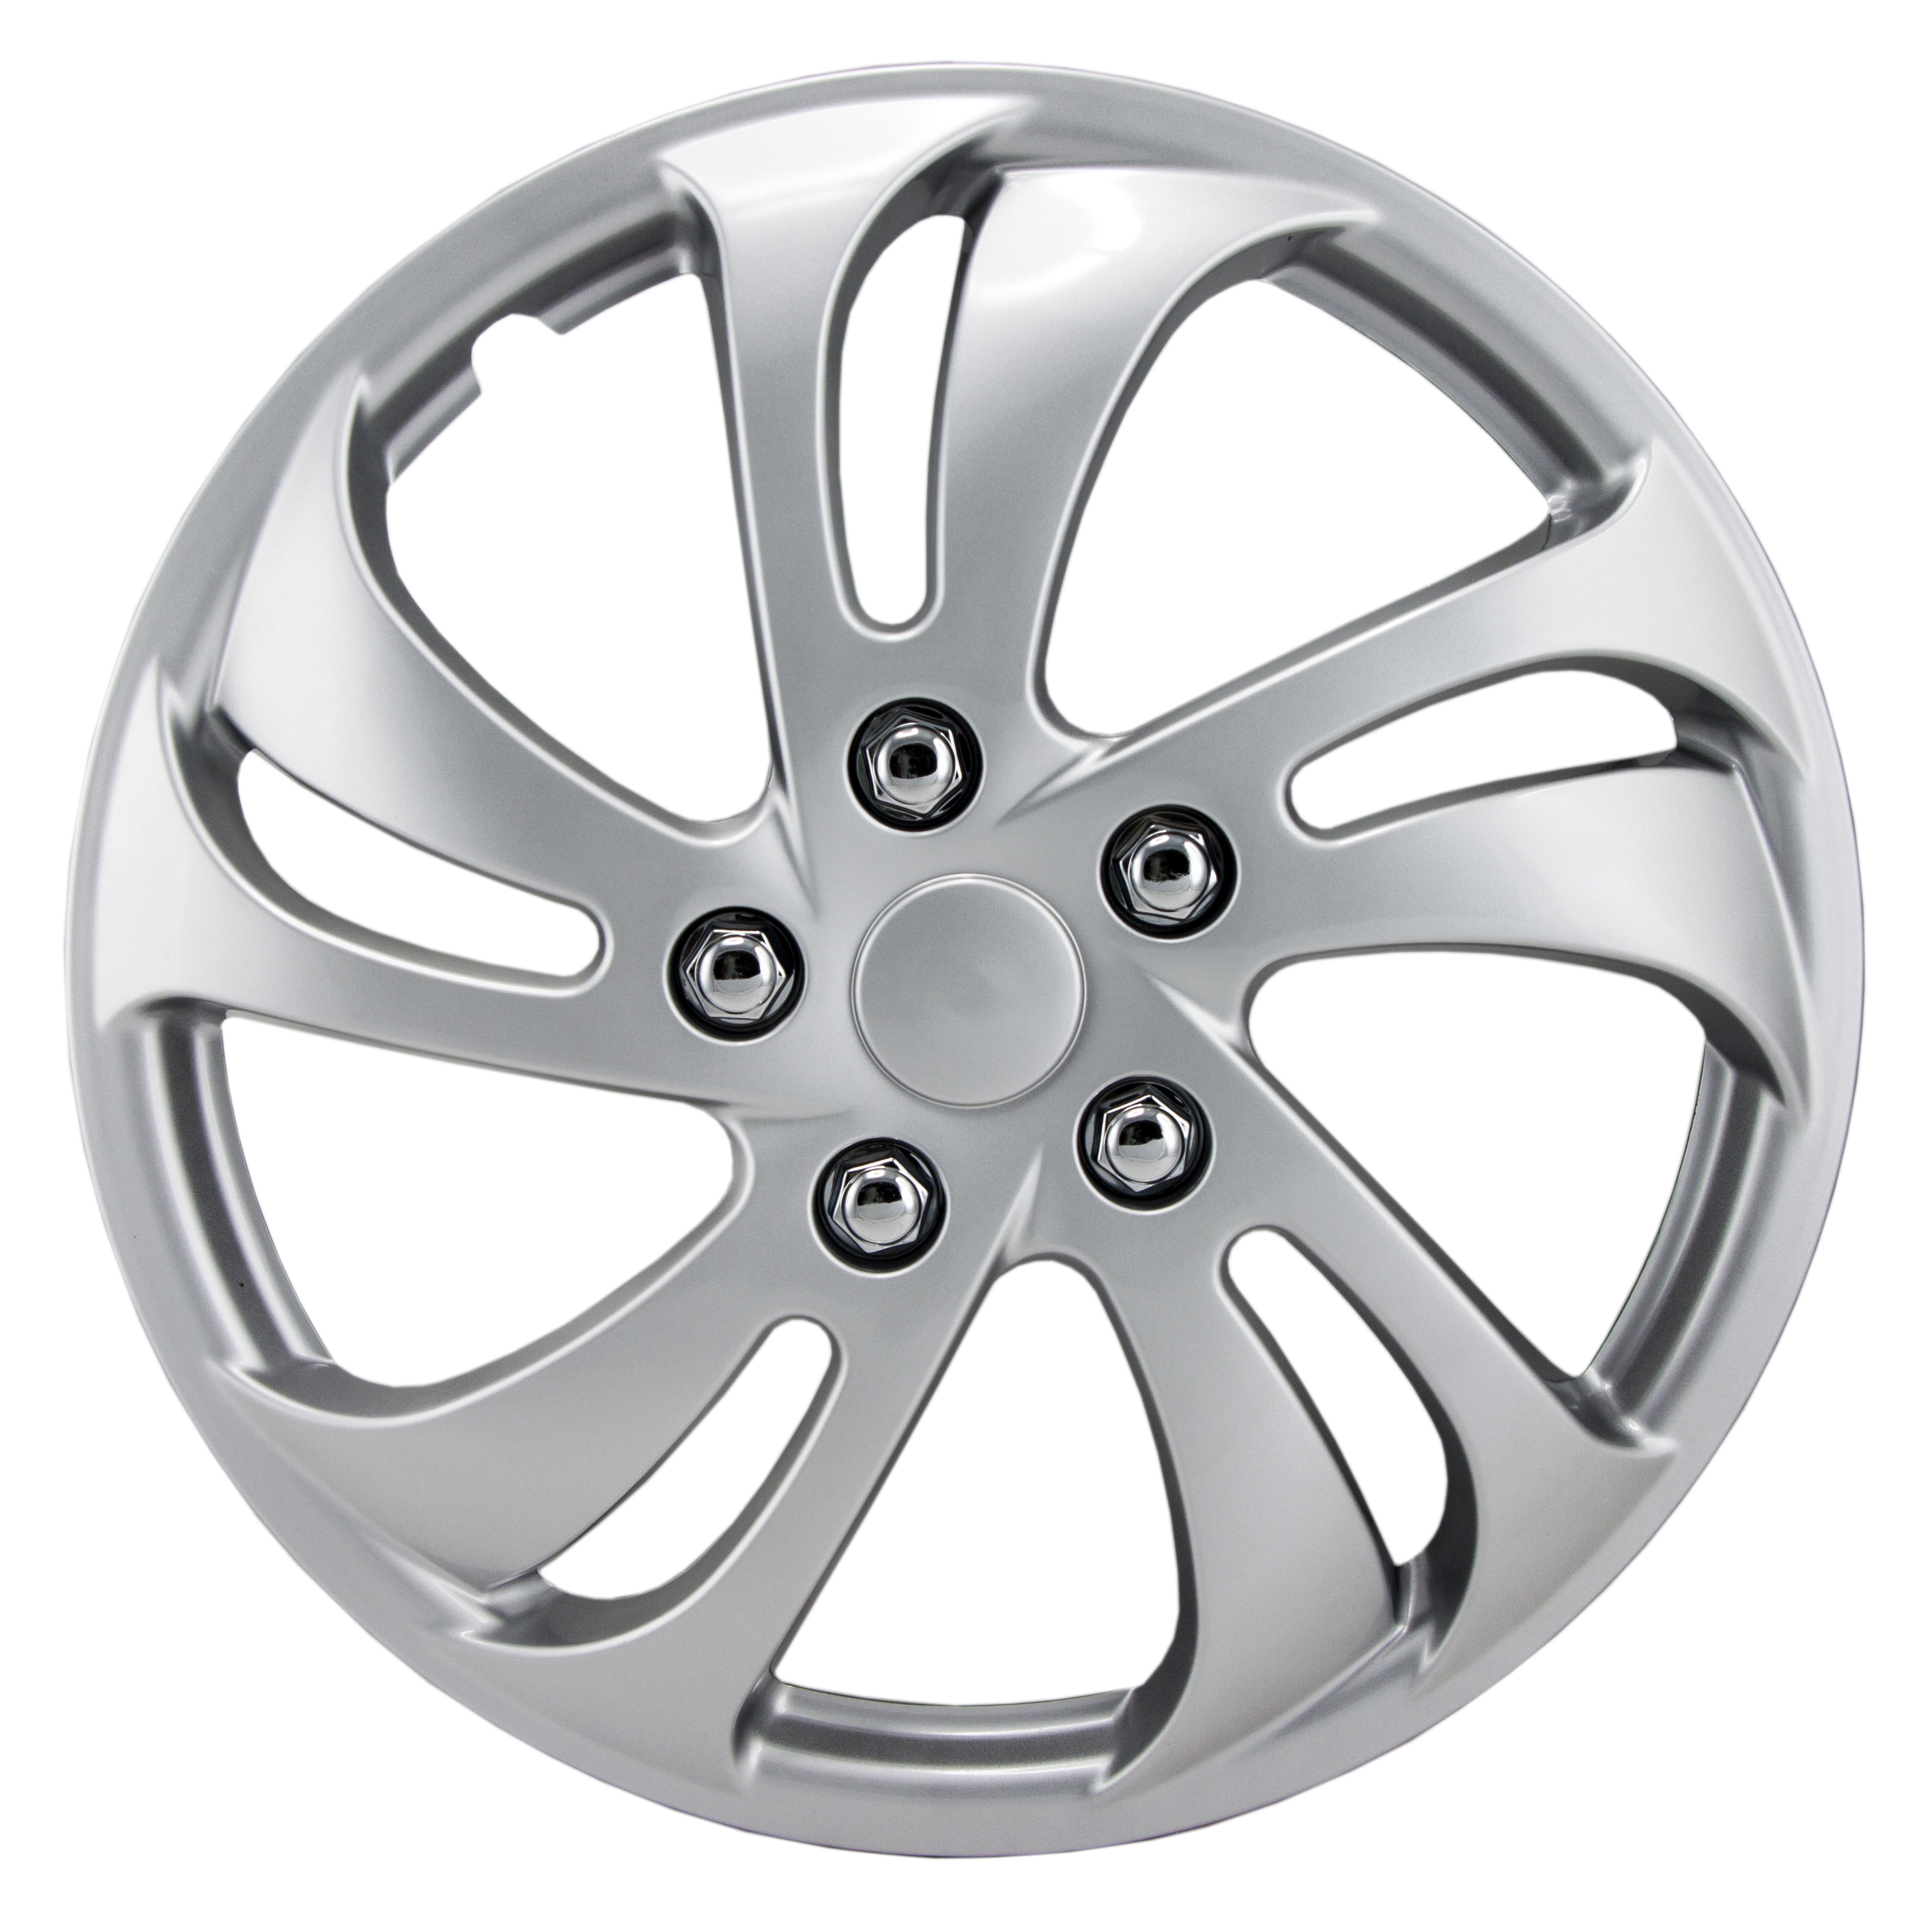 Alpena 15 inch Silver Sport Wheel Cover Kit (4 Pack)